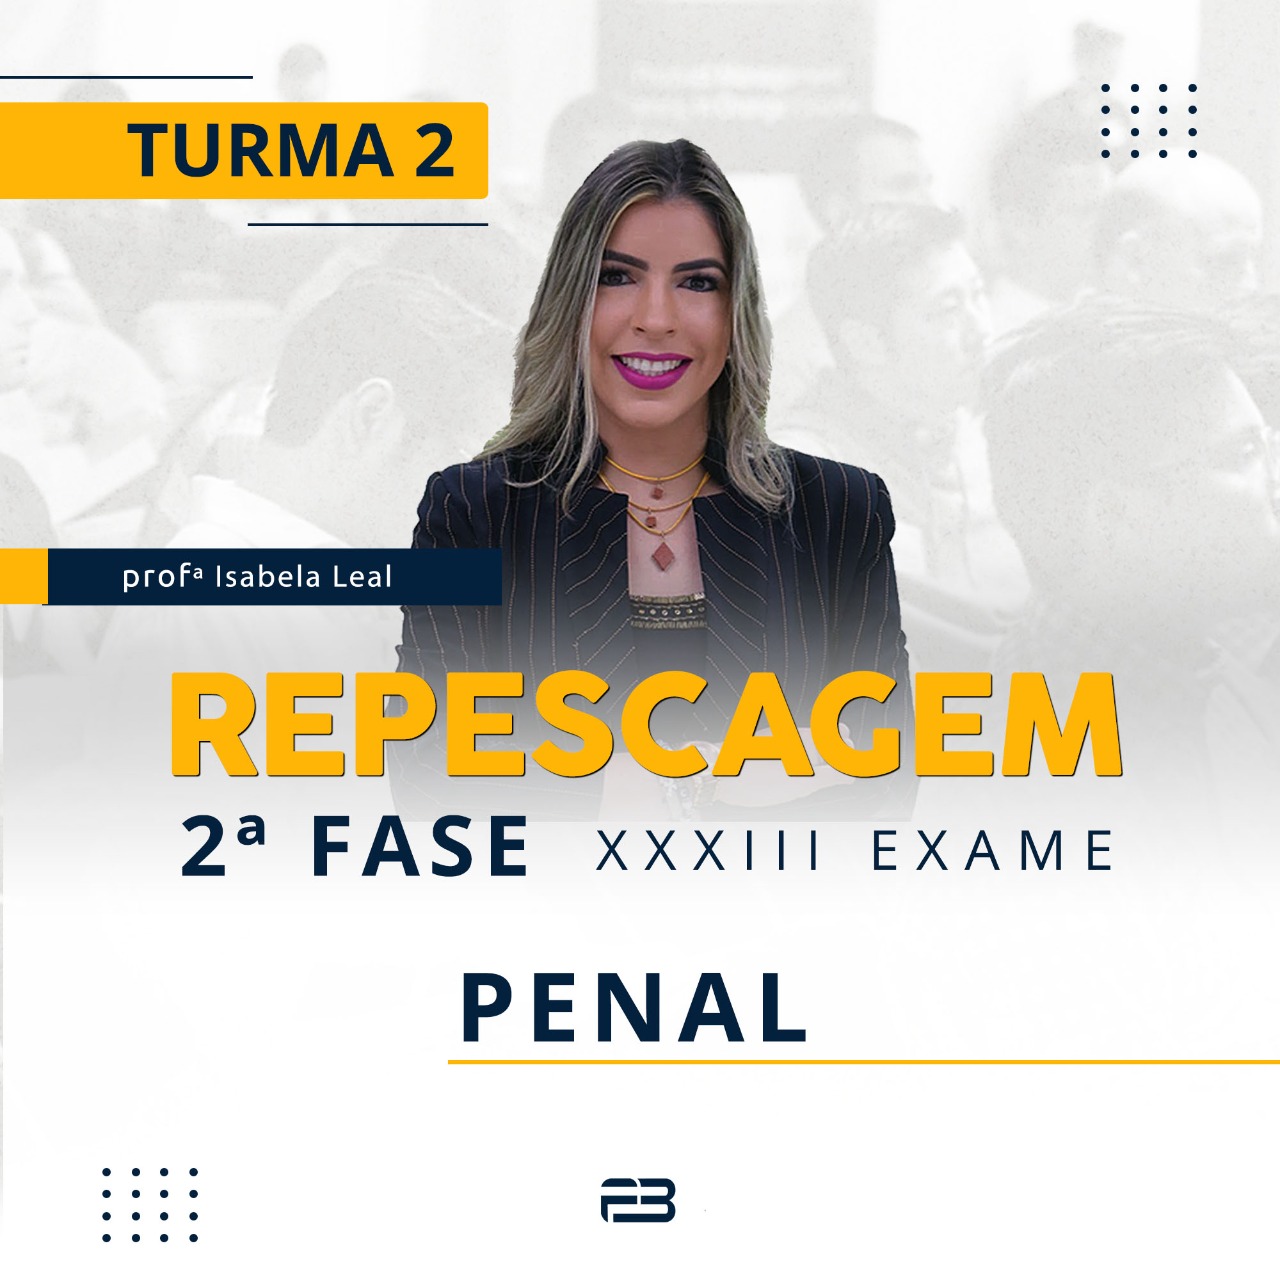 2ª FASE REPESCAGEM PENAL TURMA 2 - XXXIII EXAME ONLINE